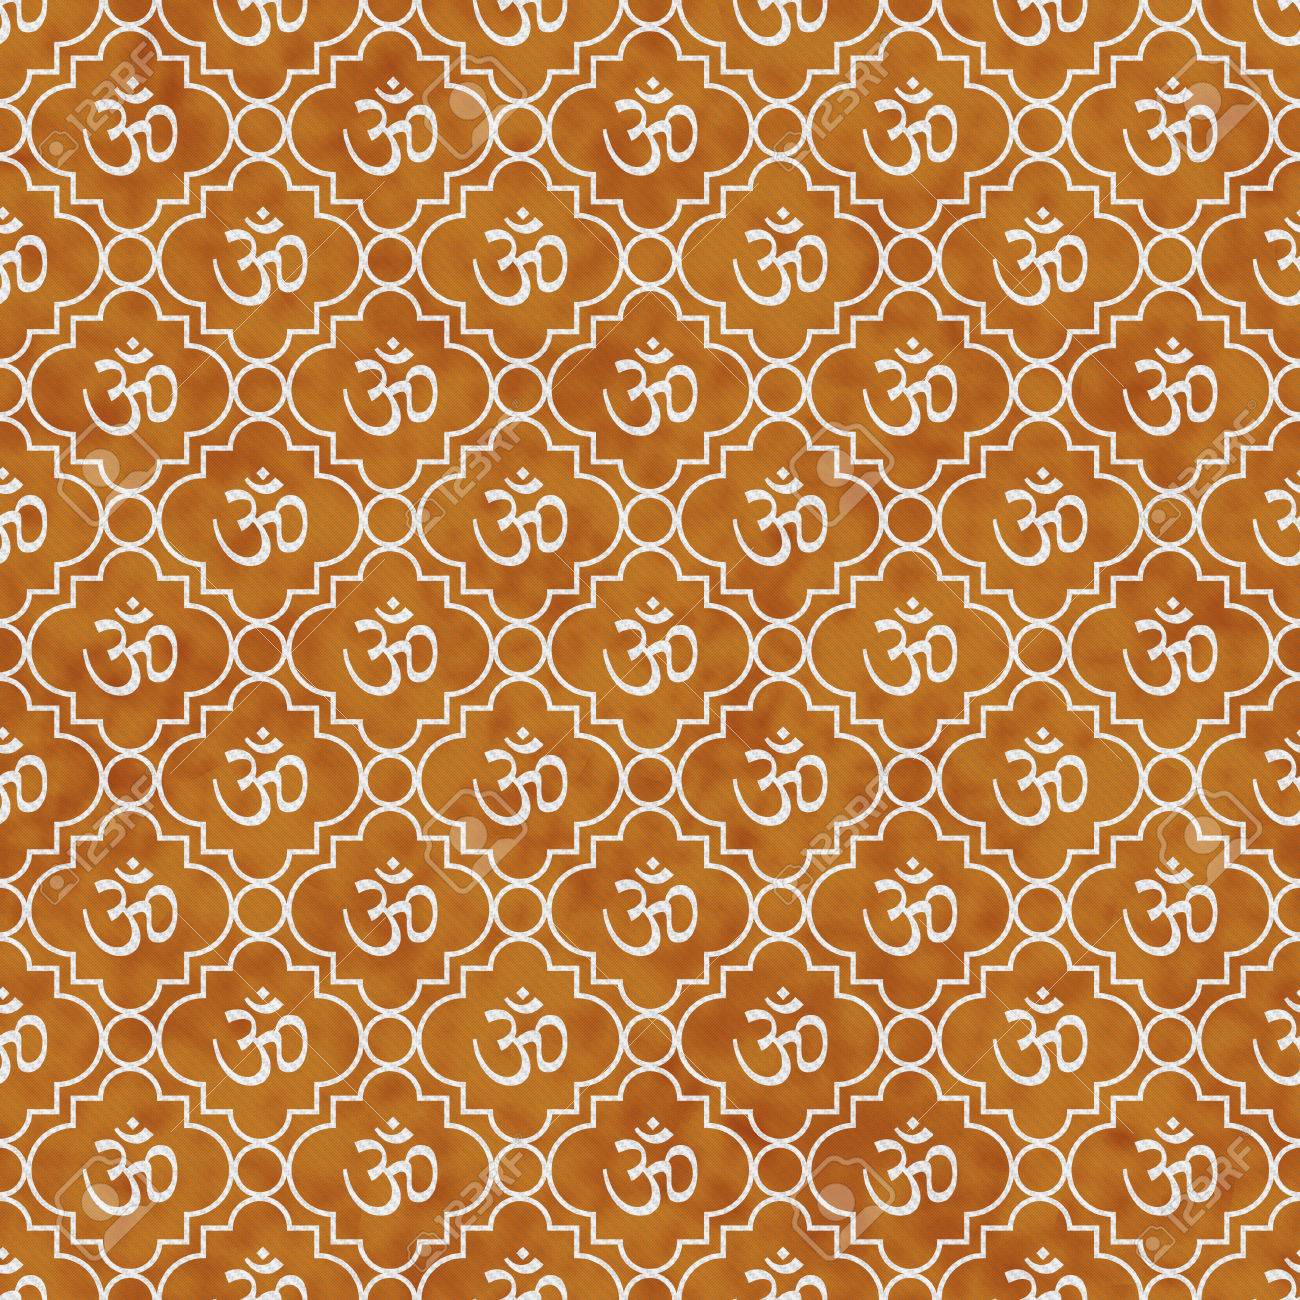 Orange And White Aum Hindu Symbol Tile Pattern Repeat Background